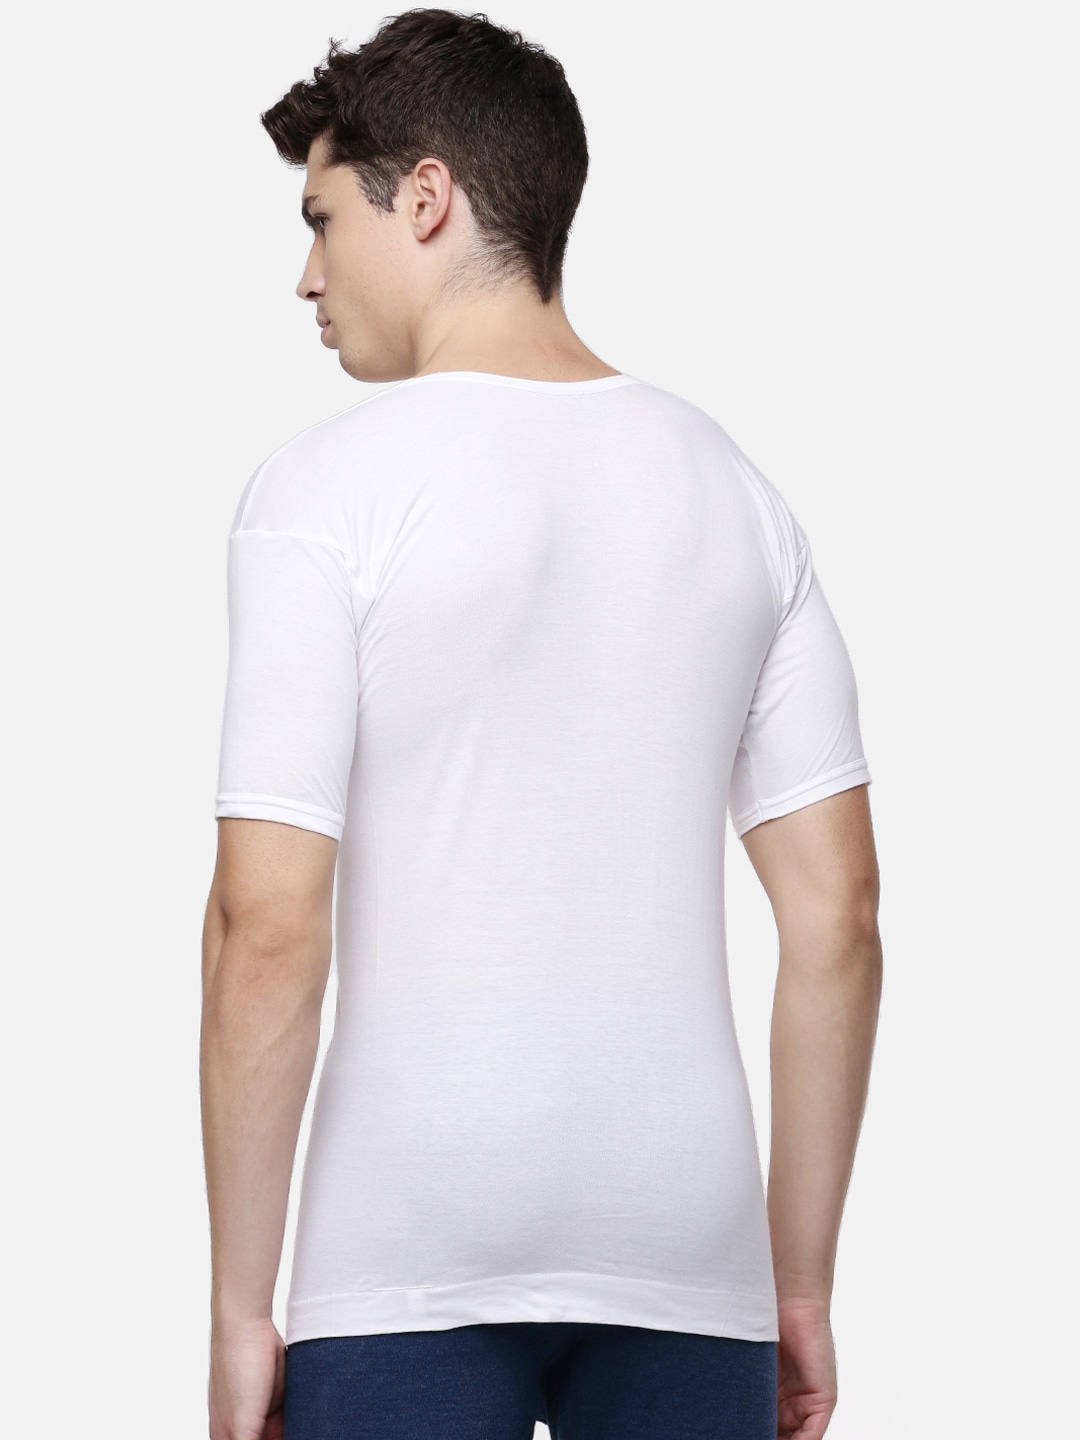 Clothing Innerwear Vests | Dollar Lehar Men Pack of 5 White Solid Innerwear Vests MLHVE-02-PO5 - OJ77921